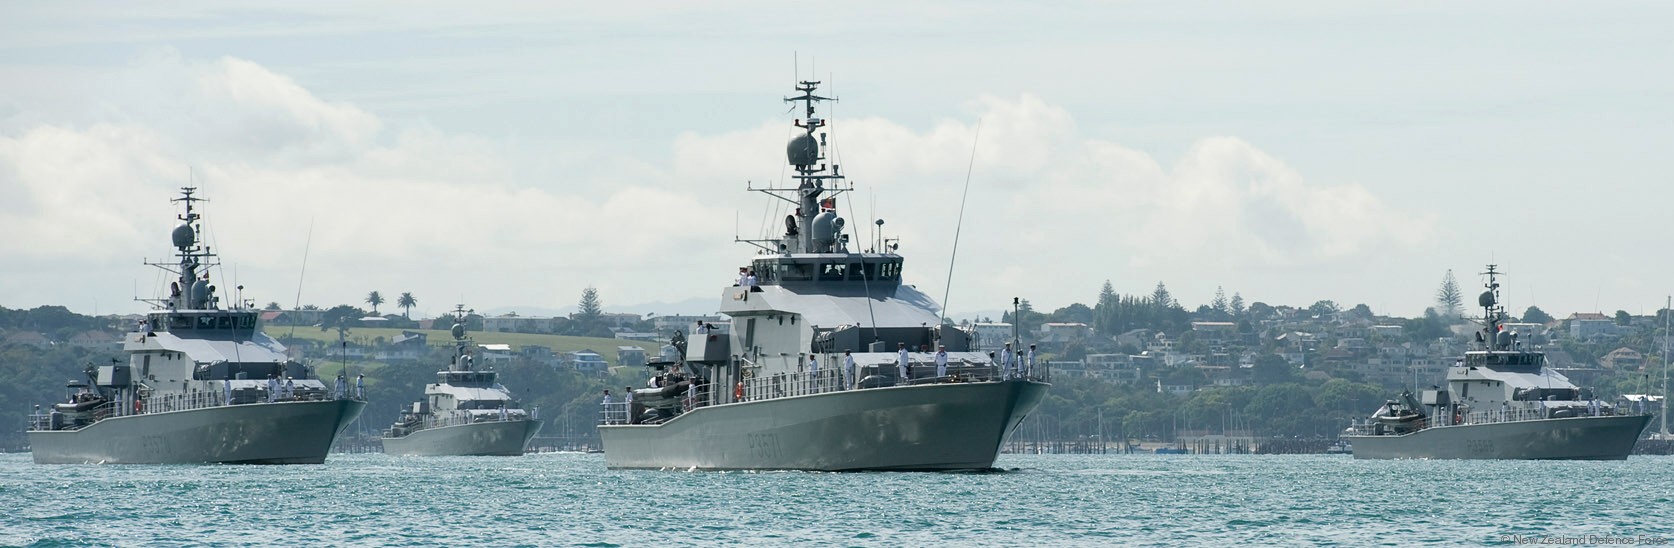 protector rotoiti class inshore patrol vessel royal new zealand navy 02x